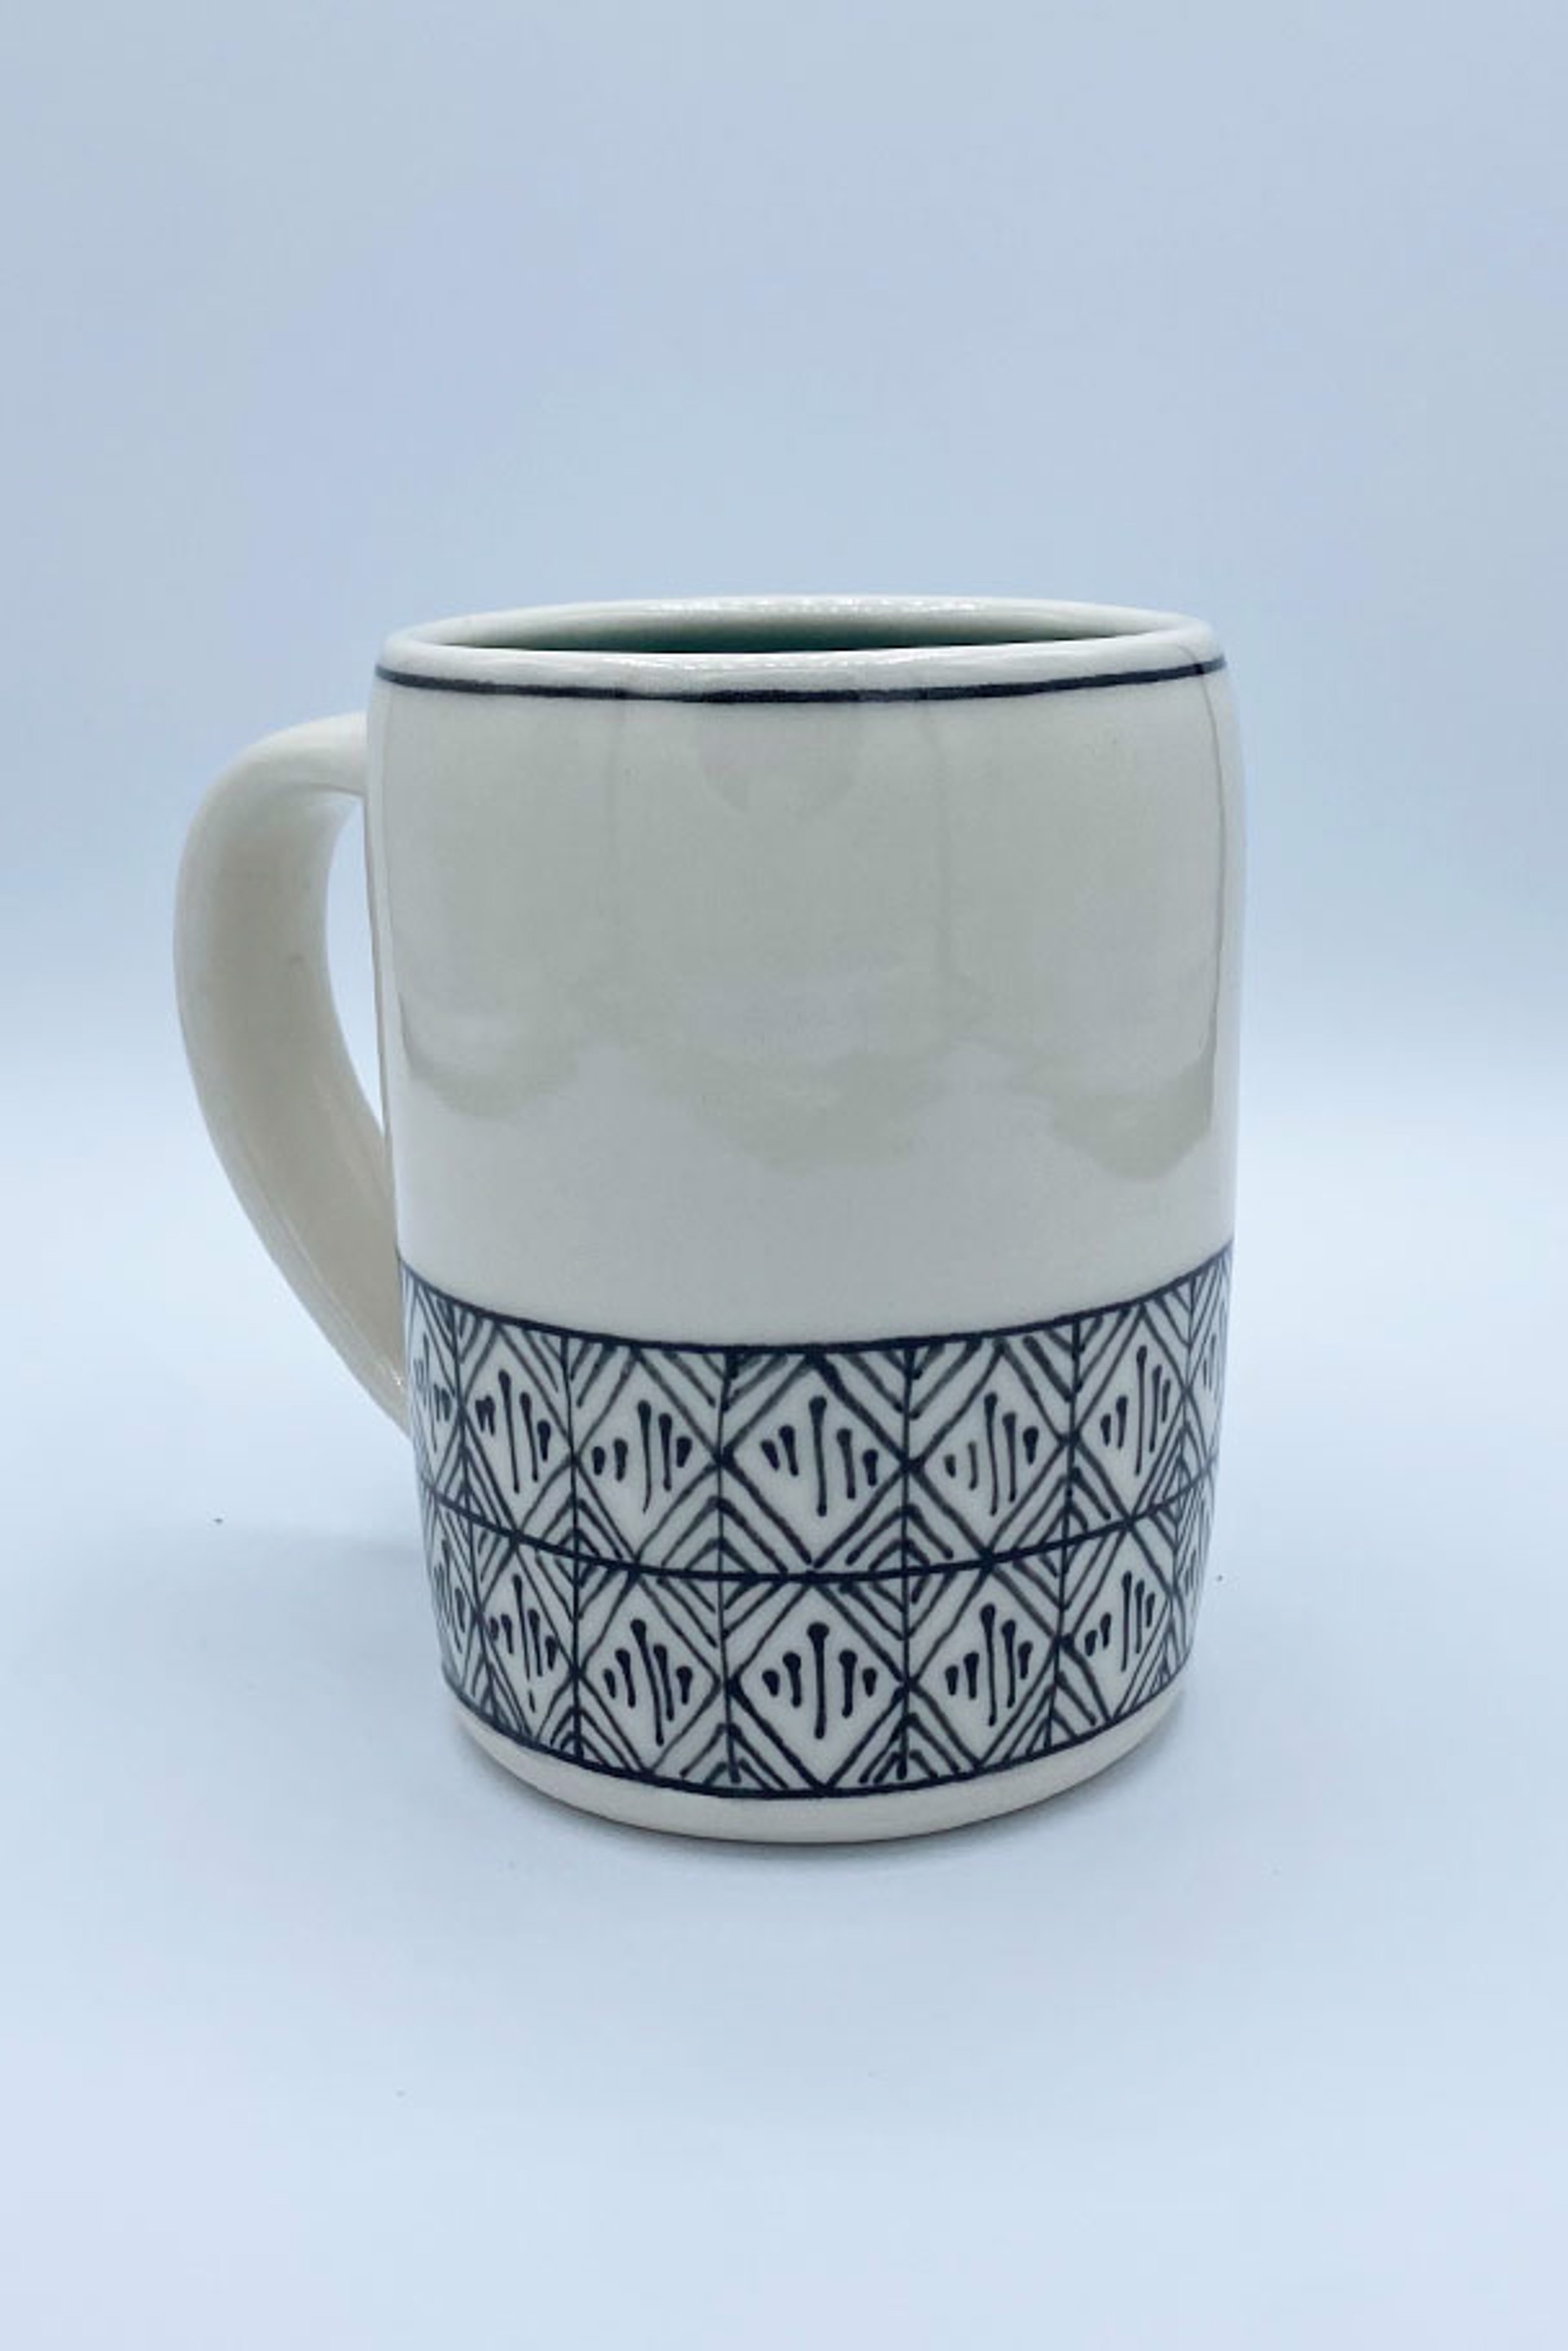 Mug 2 by Laura Cooke